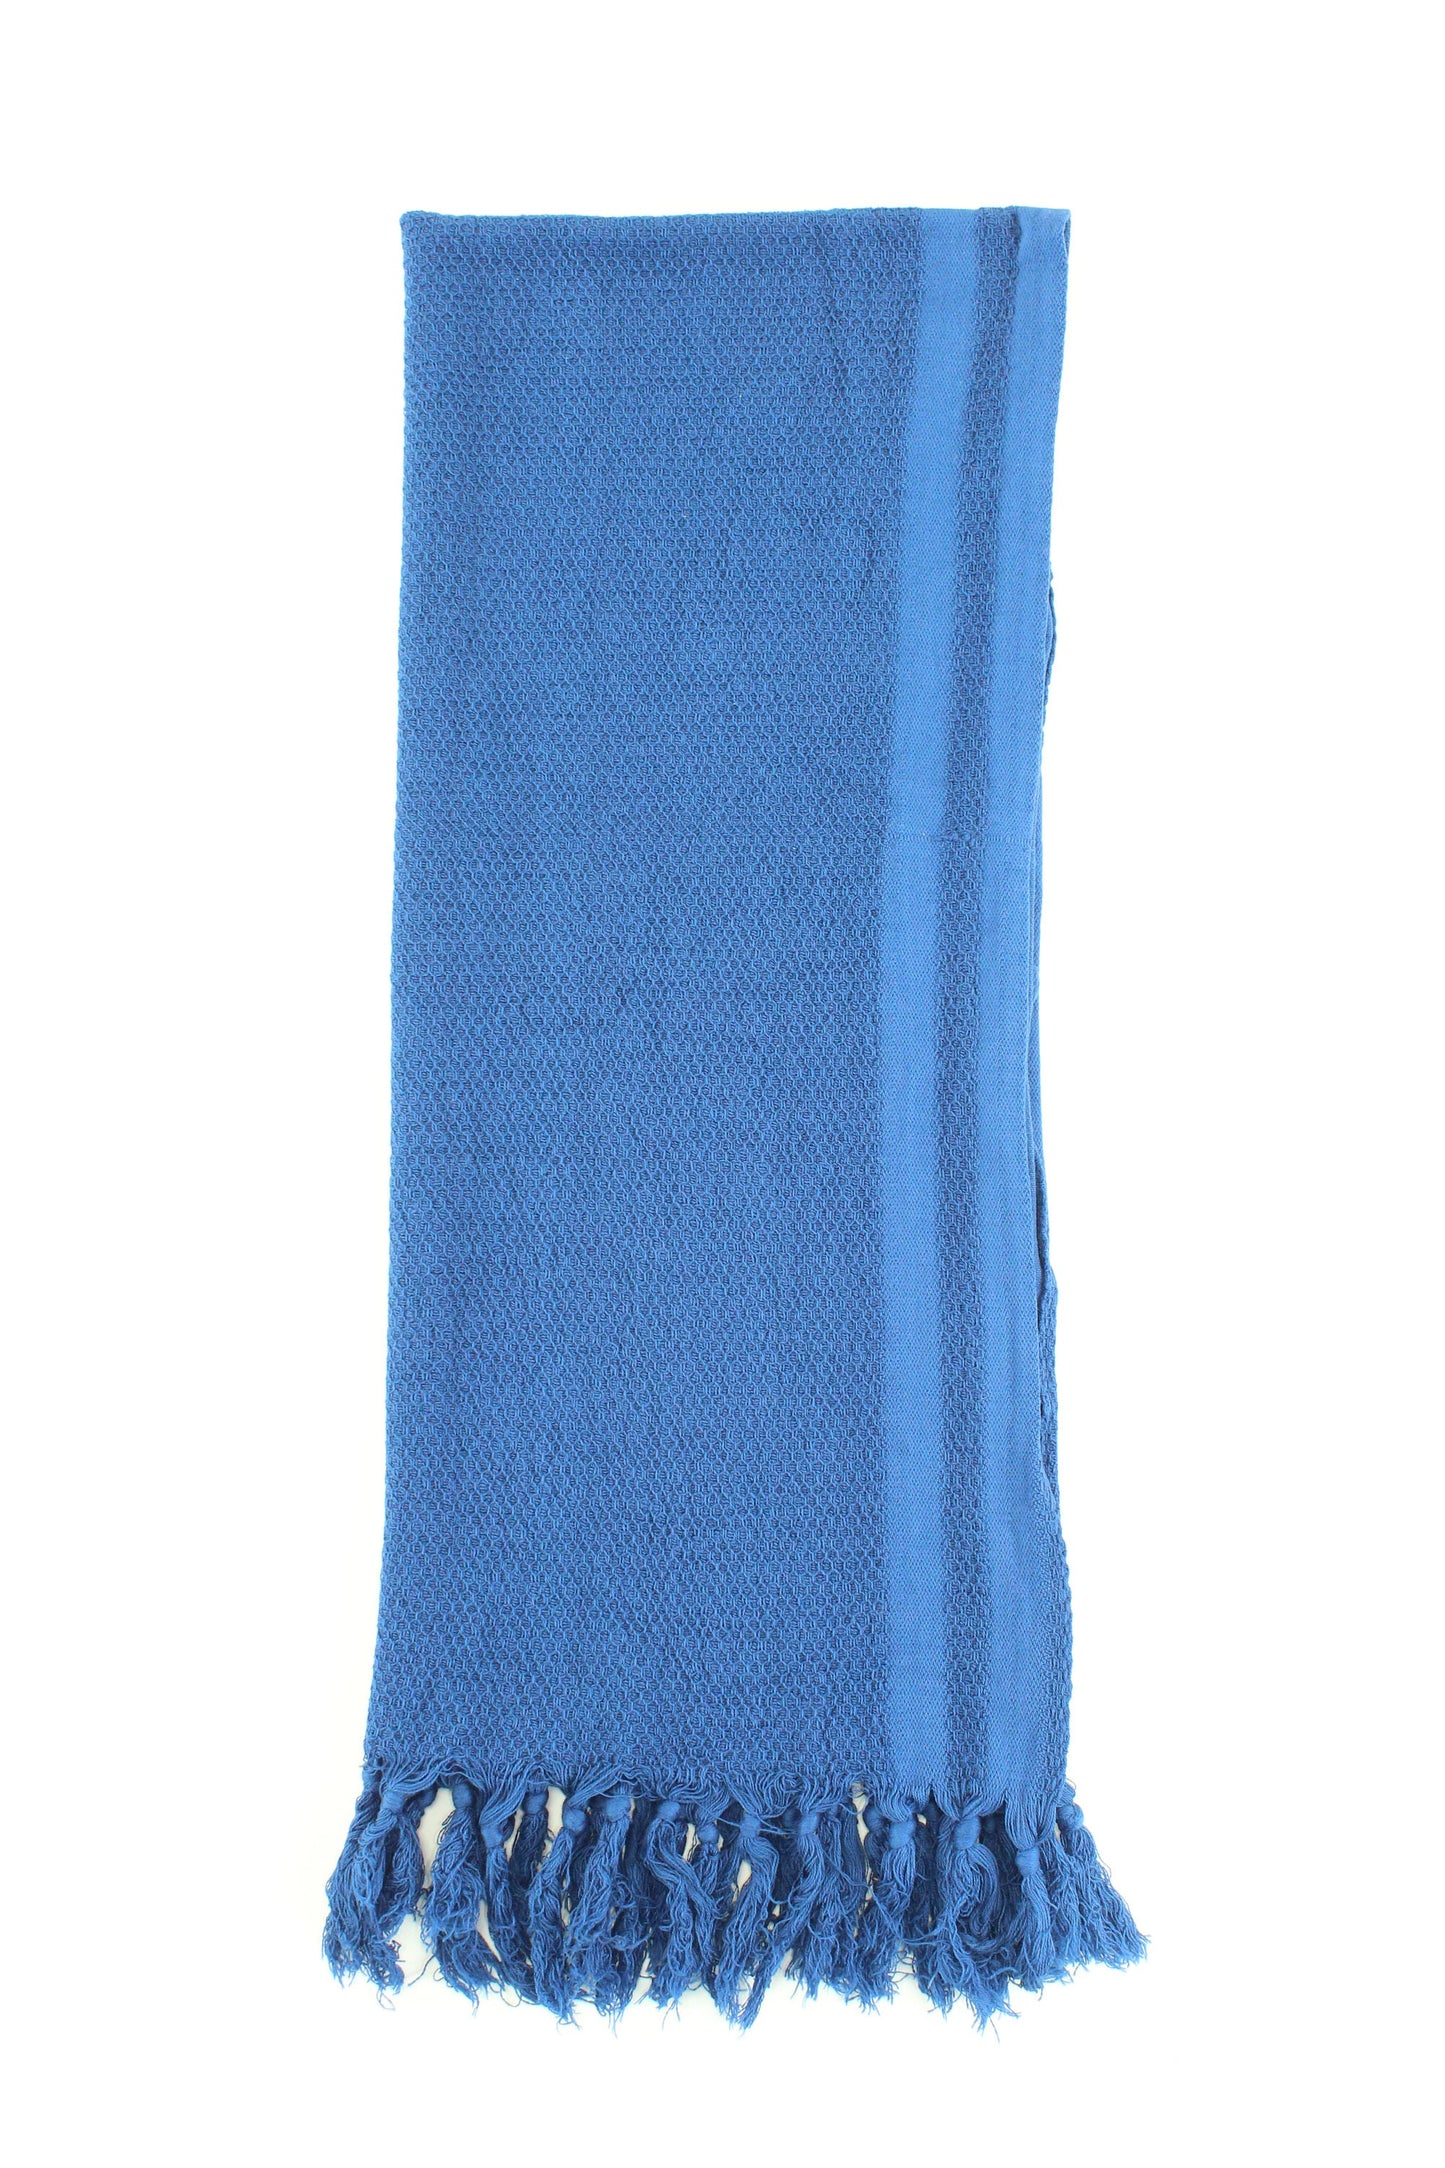 Premium Turkish Towel Peshtemal Fouta (Royal Blue)